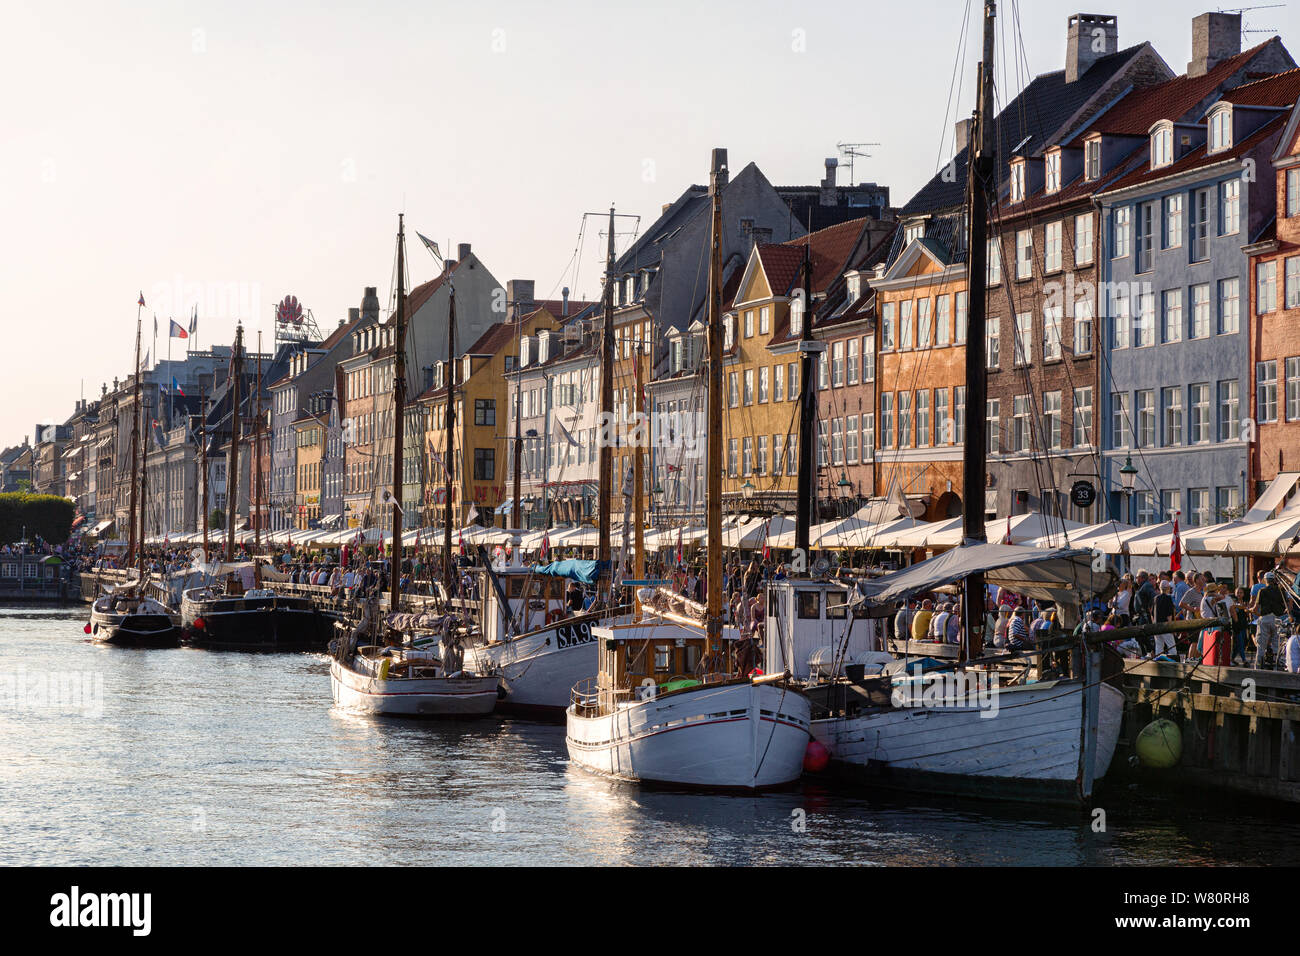 Nyhavn Kopenhagen - Boote im Abendlicht festgemacht, Kopenhagen Dänemark Skandinavien Europa Stockfoto